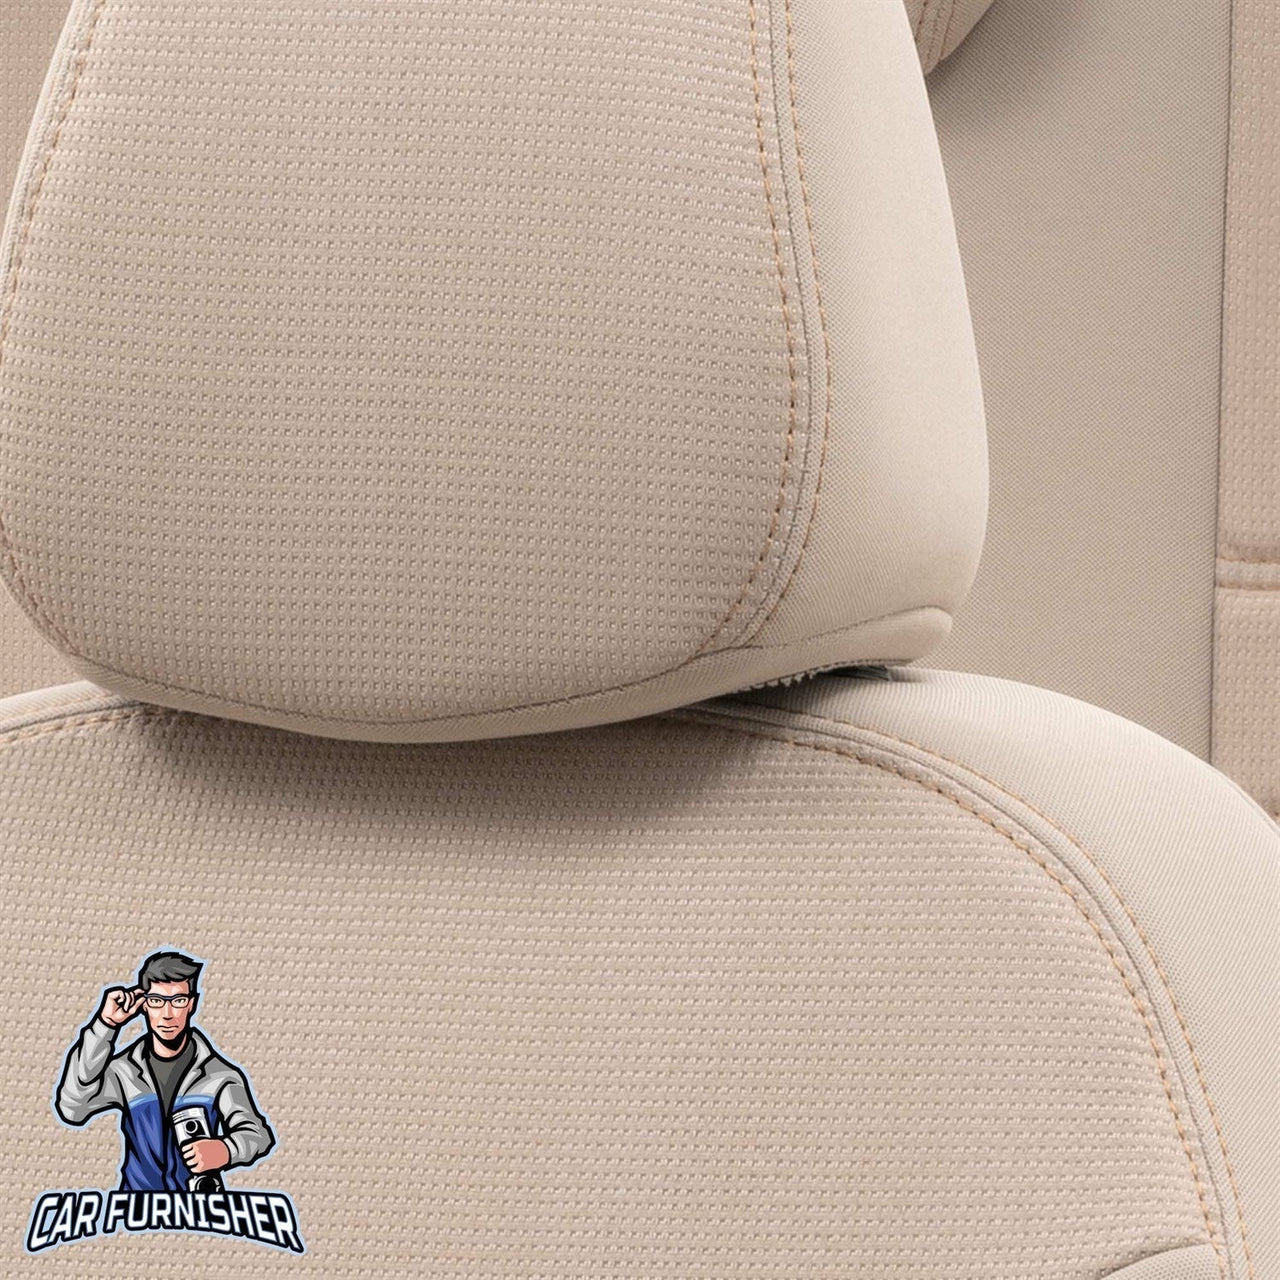 Man TGS Seat Cover Original Jacquard Design Beige Front Seats (2 Seats + Handrest + Headrests) Jacquard Fabric